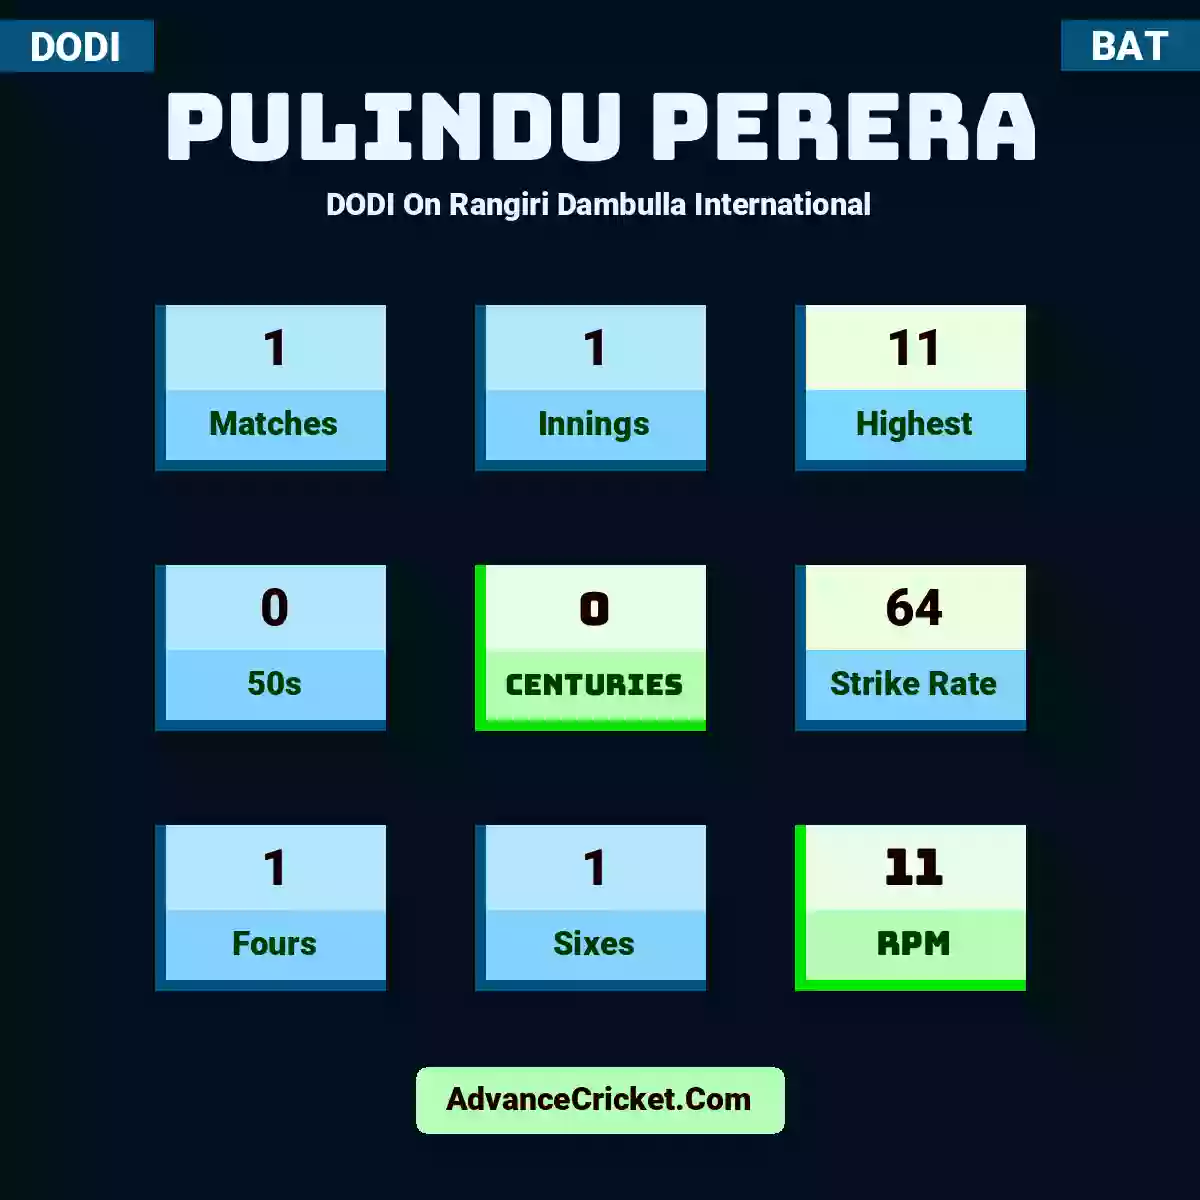 Pulindu Perera DODI  On Rangiri Dambulla International, Pulindu Perera played 1 matches, scored 11 runs as highest, 0 half-centuries, and 0 centuries, with a strike rate of 64. P.Perera hit 1 fours and 1 sixes, with an RPM of 11.